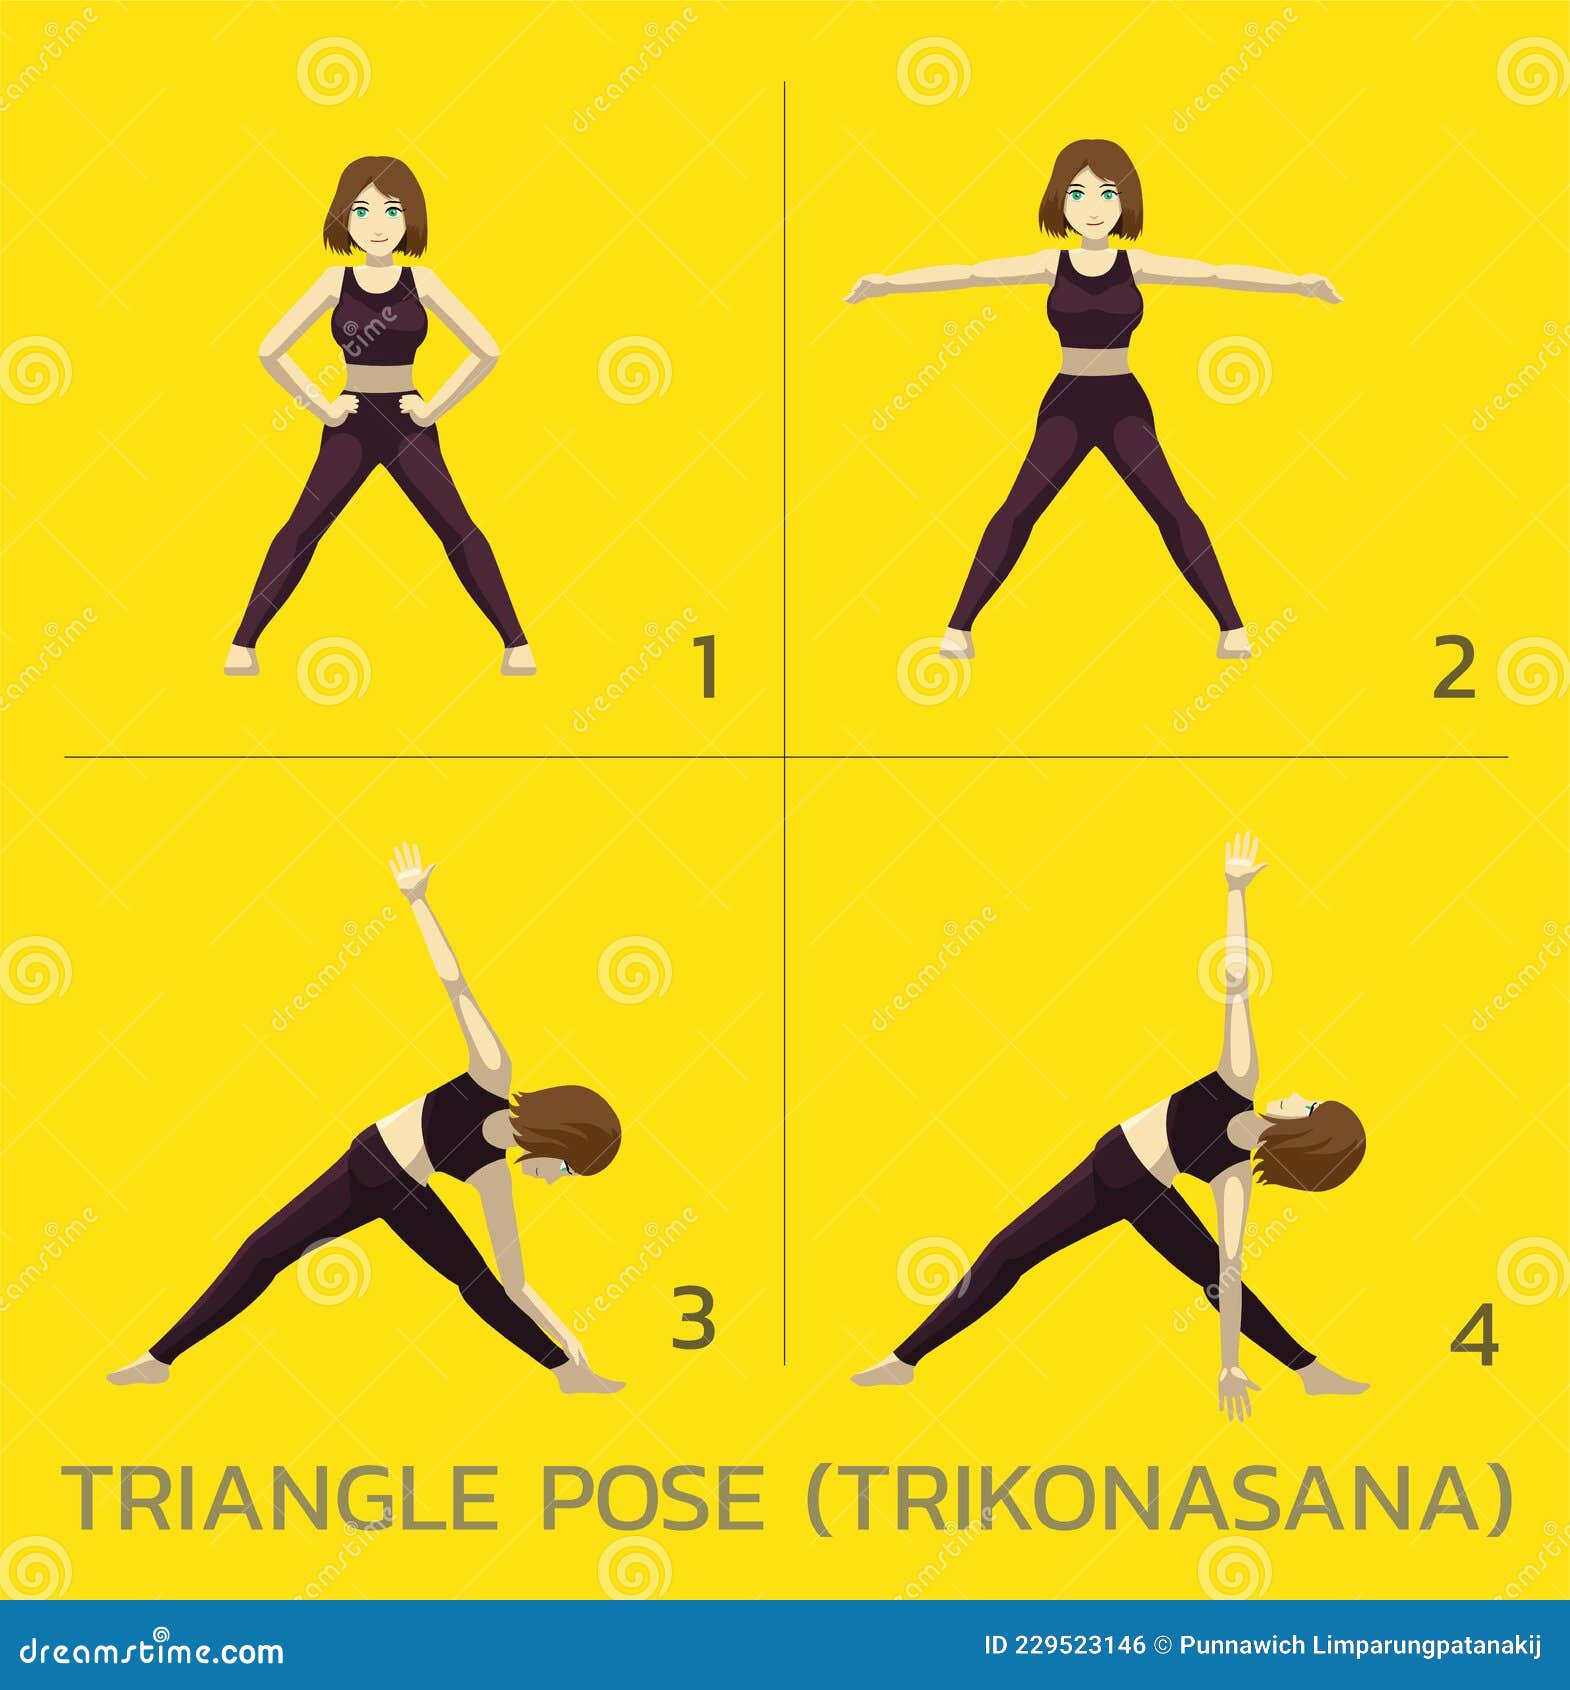 Triangle Pose Trikonasana Yoga Manga Tutorial How Cartoon Vector  Illustration Stock Vector - Illustration of teach, athlete: 229523146